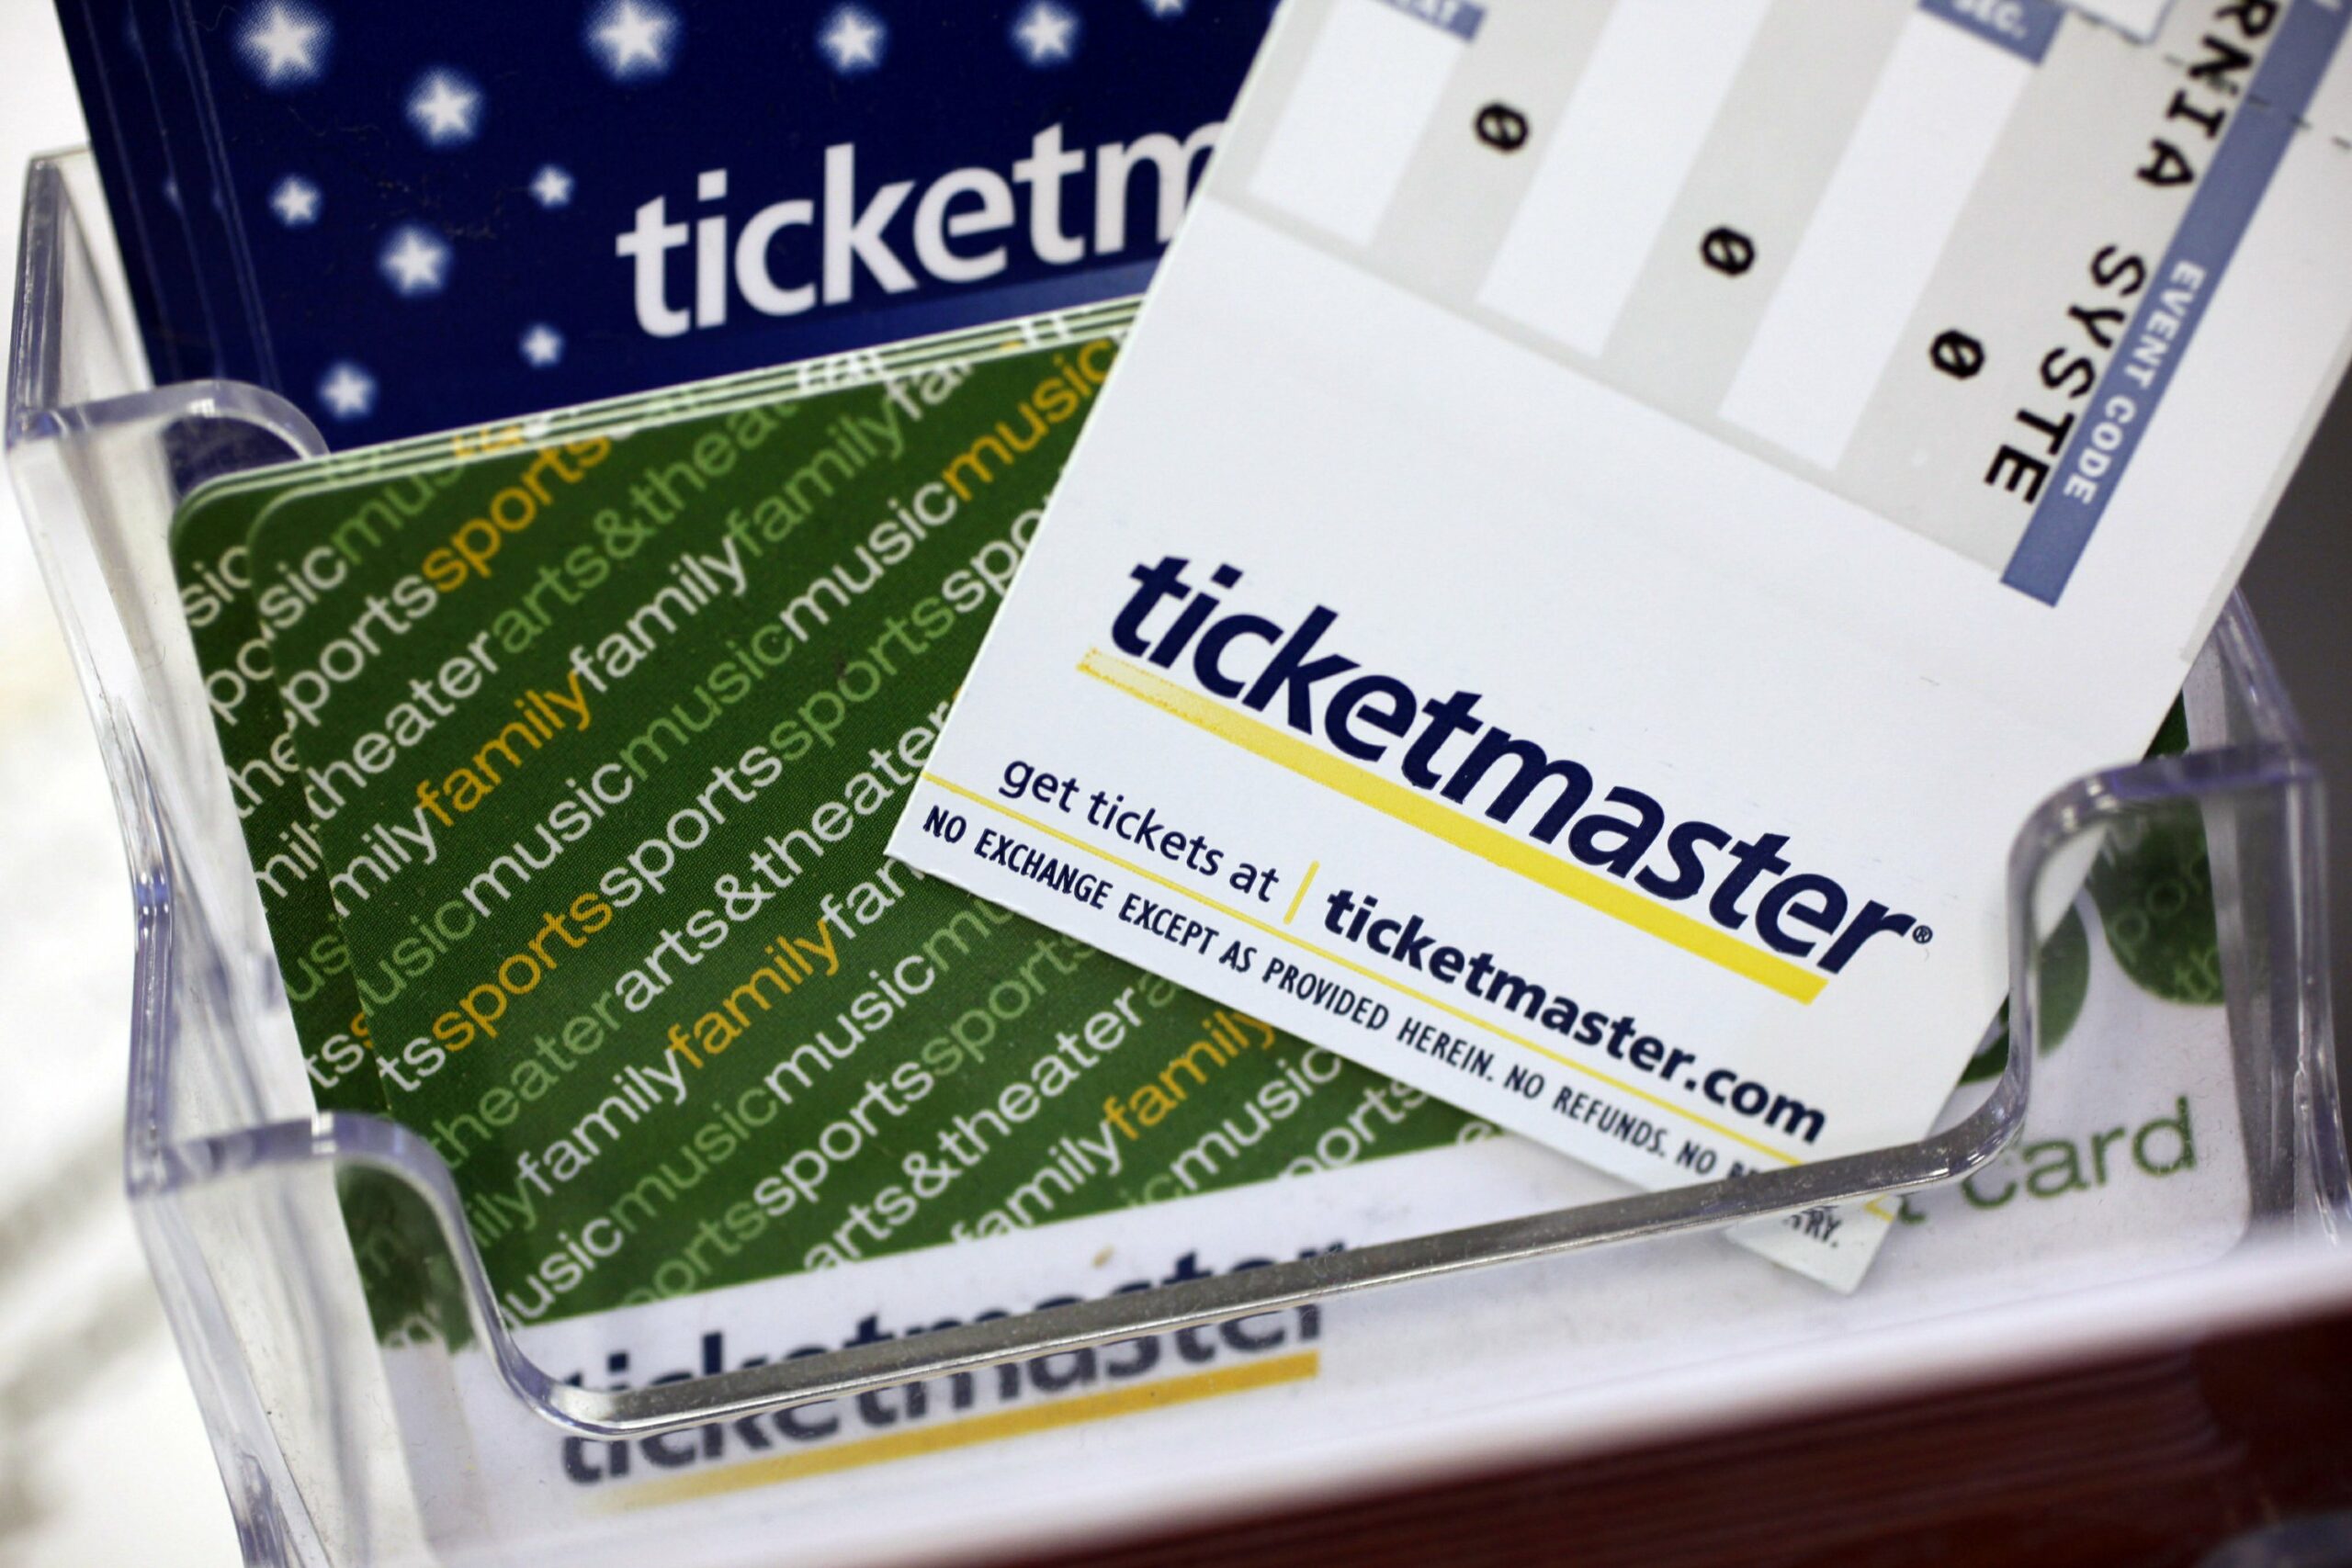 Senate panel grants admission to bill requiring transferable event tickets